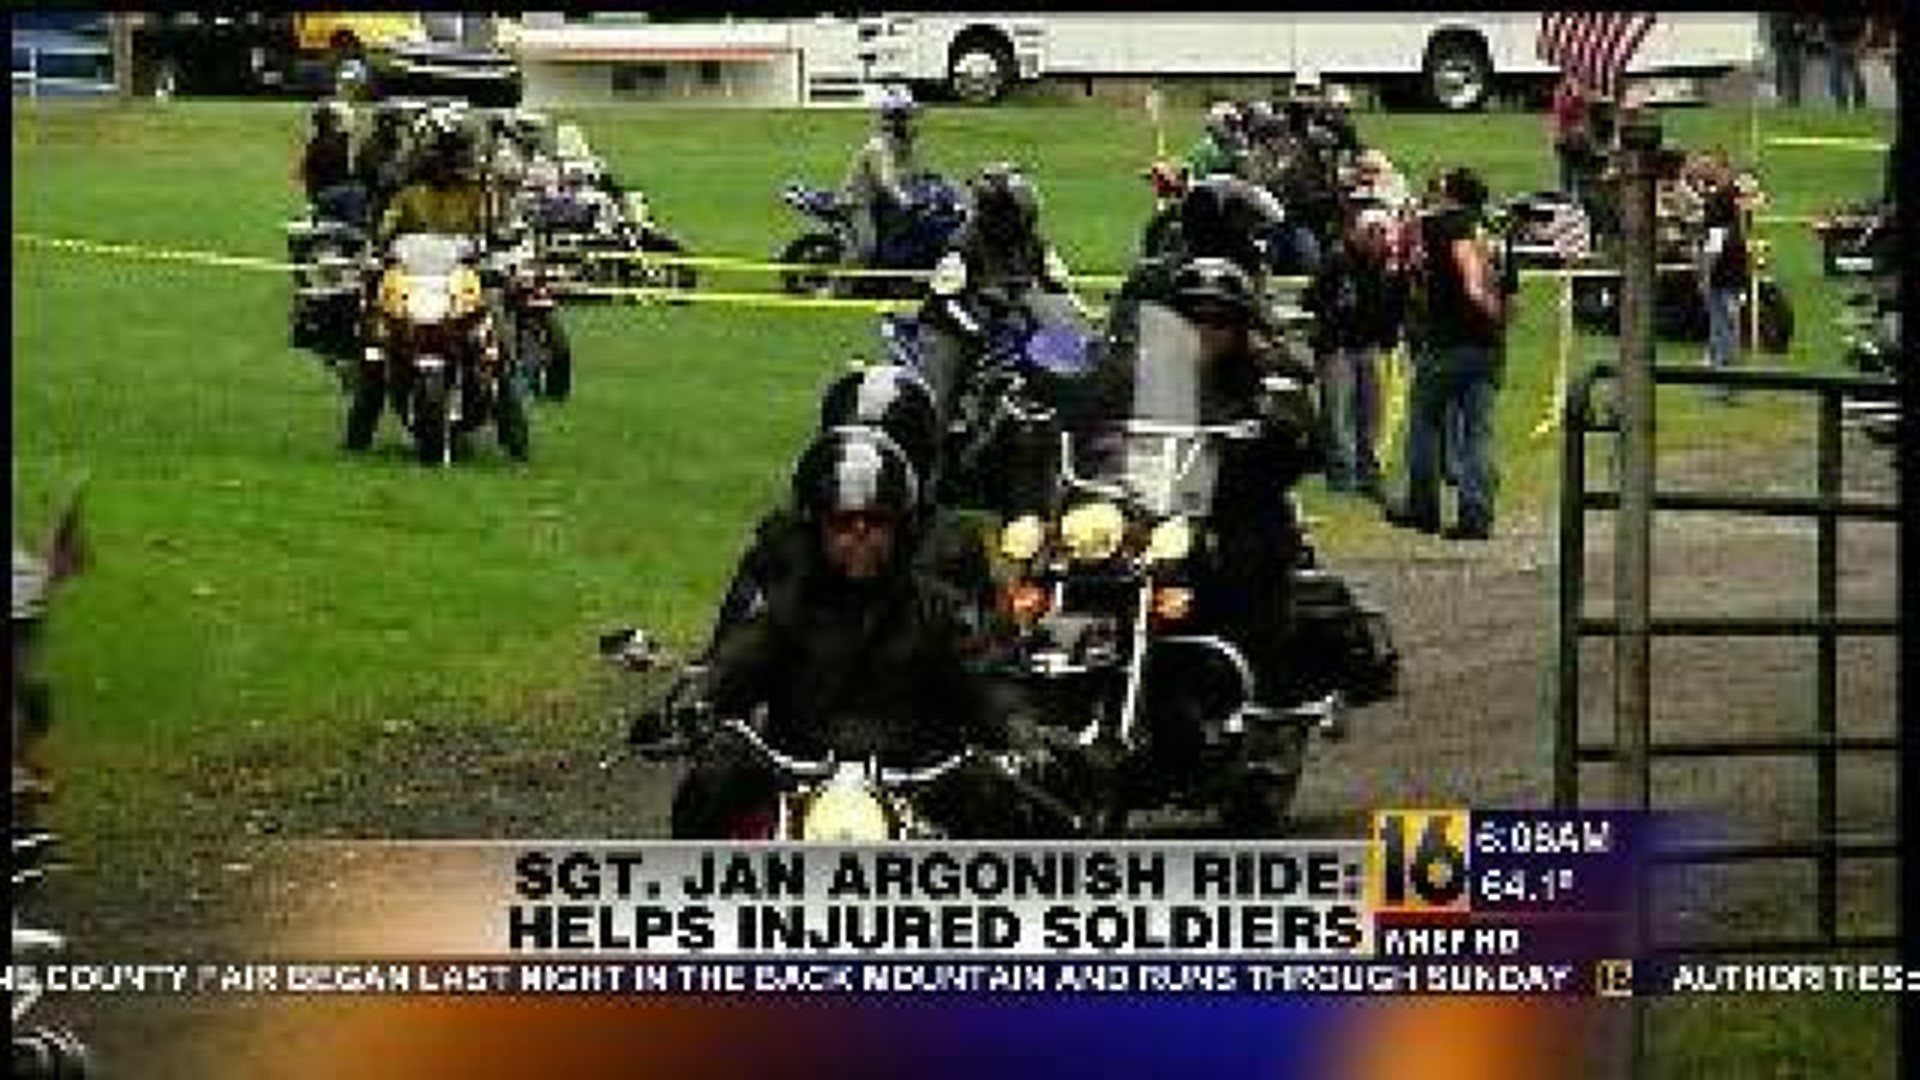 SGT Jan Argonish Ride: Who It Helps